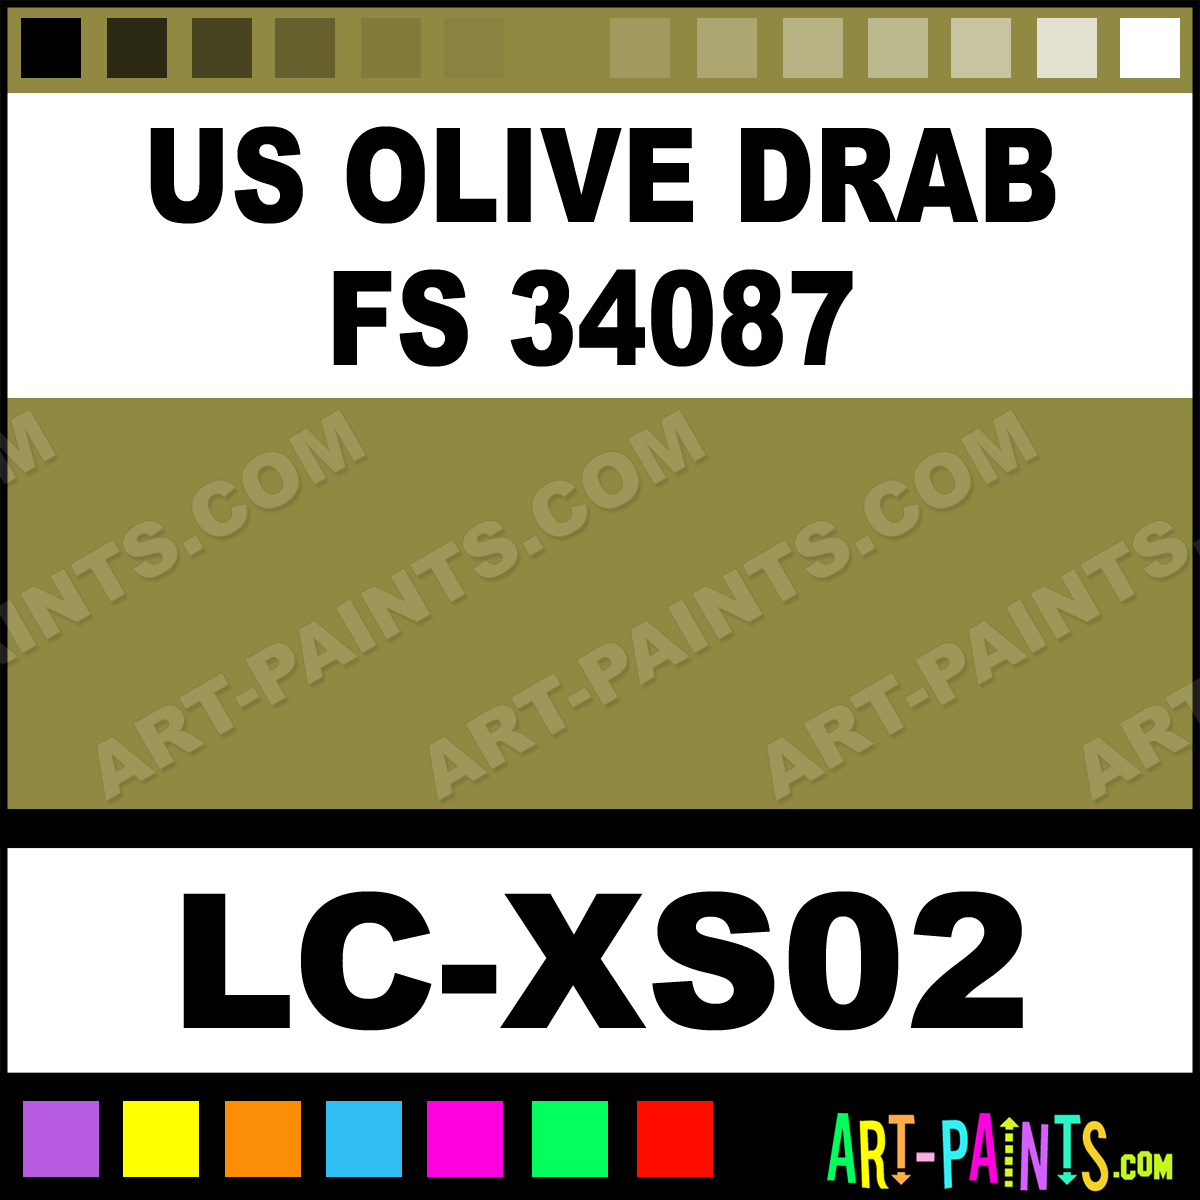 US-Olive-Drab-FS-34087-lg.jpg